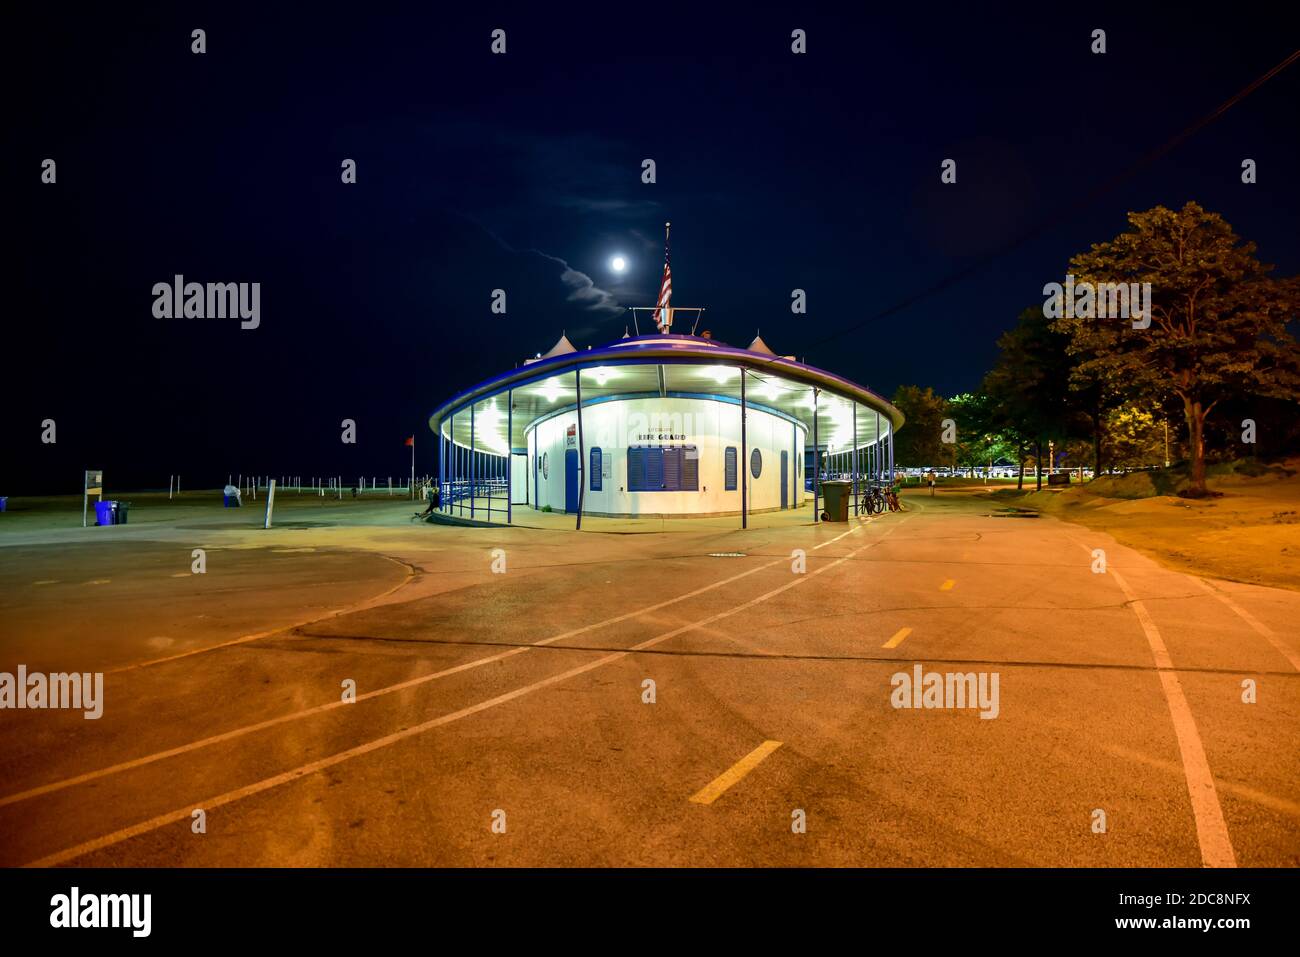 City park beach public building at night Stock Photo